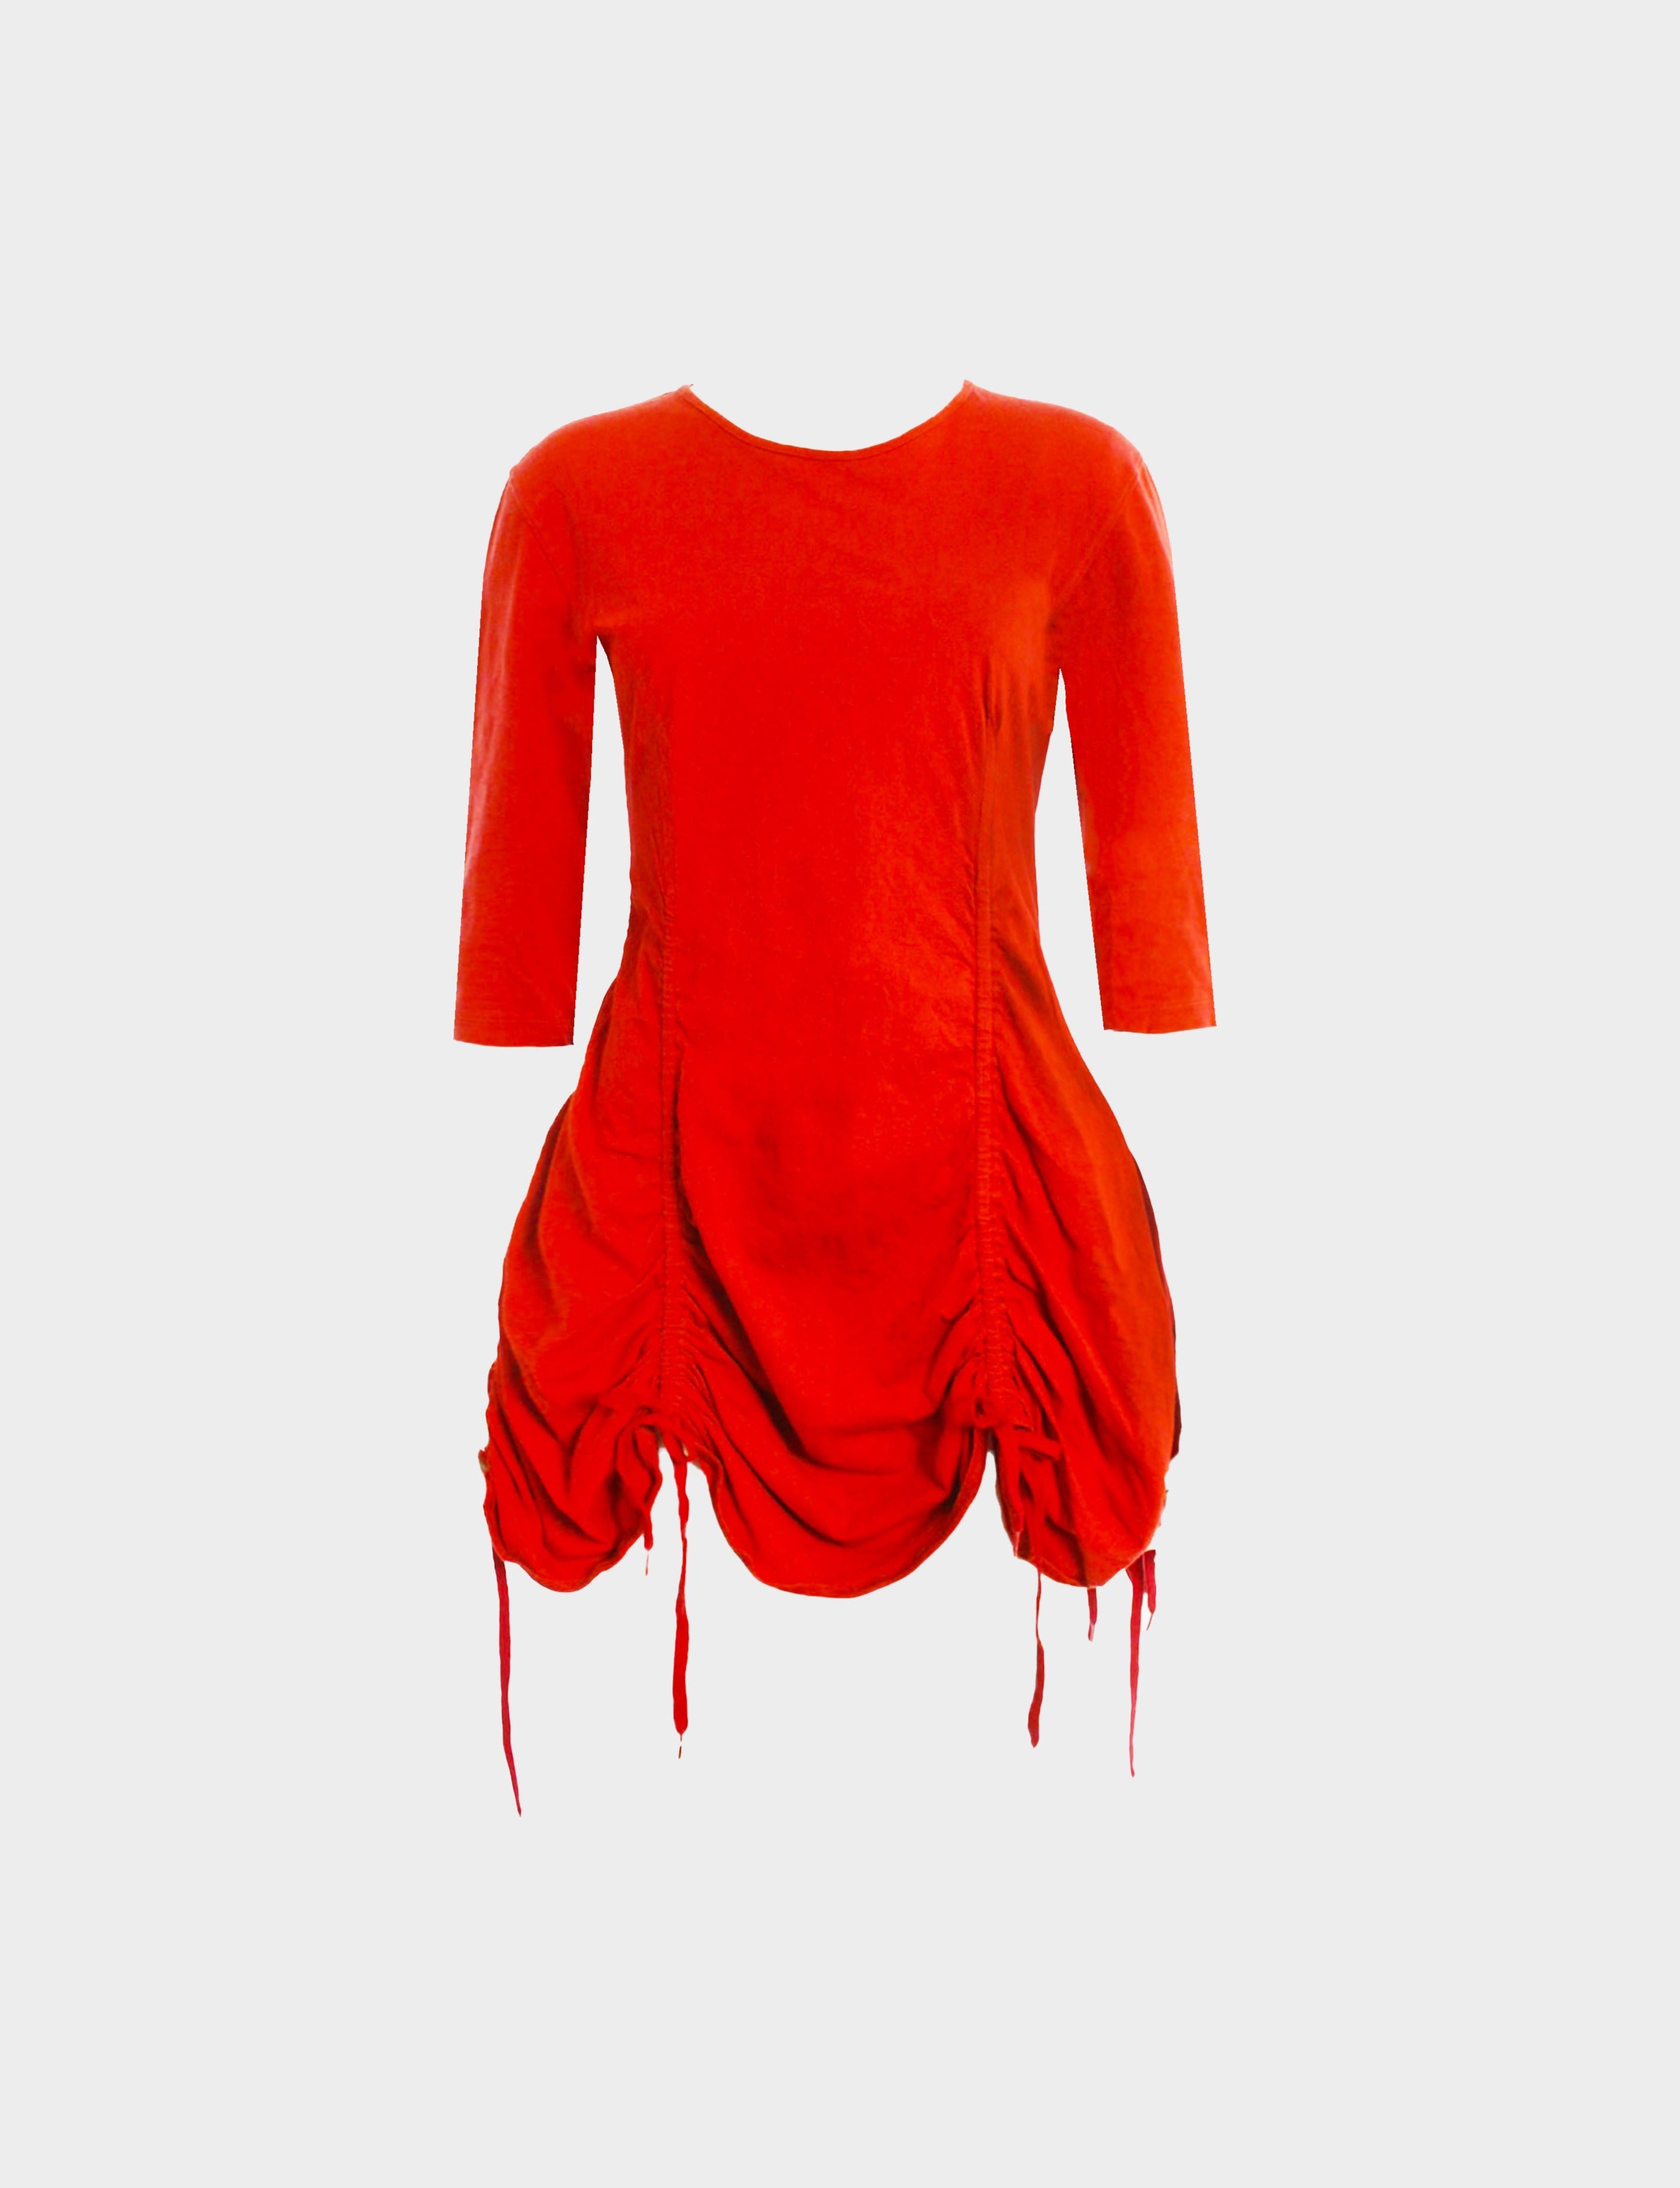 Jean Paul Gaultier 1990s Red Drawstring Dress